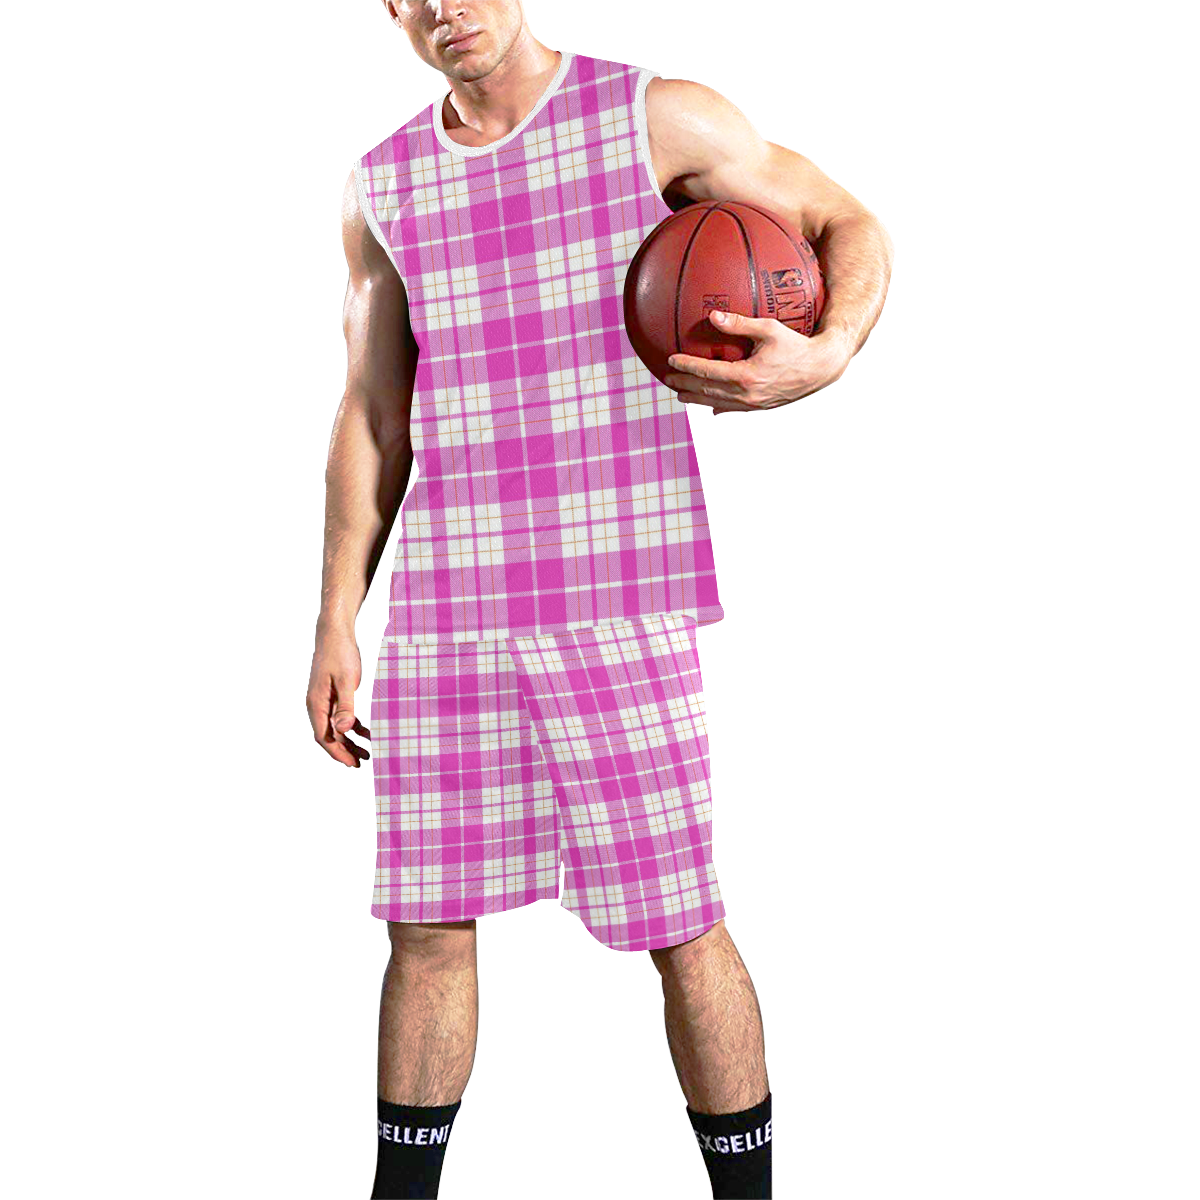 PINK TARTAN All Over Print Basketball Uniform